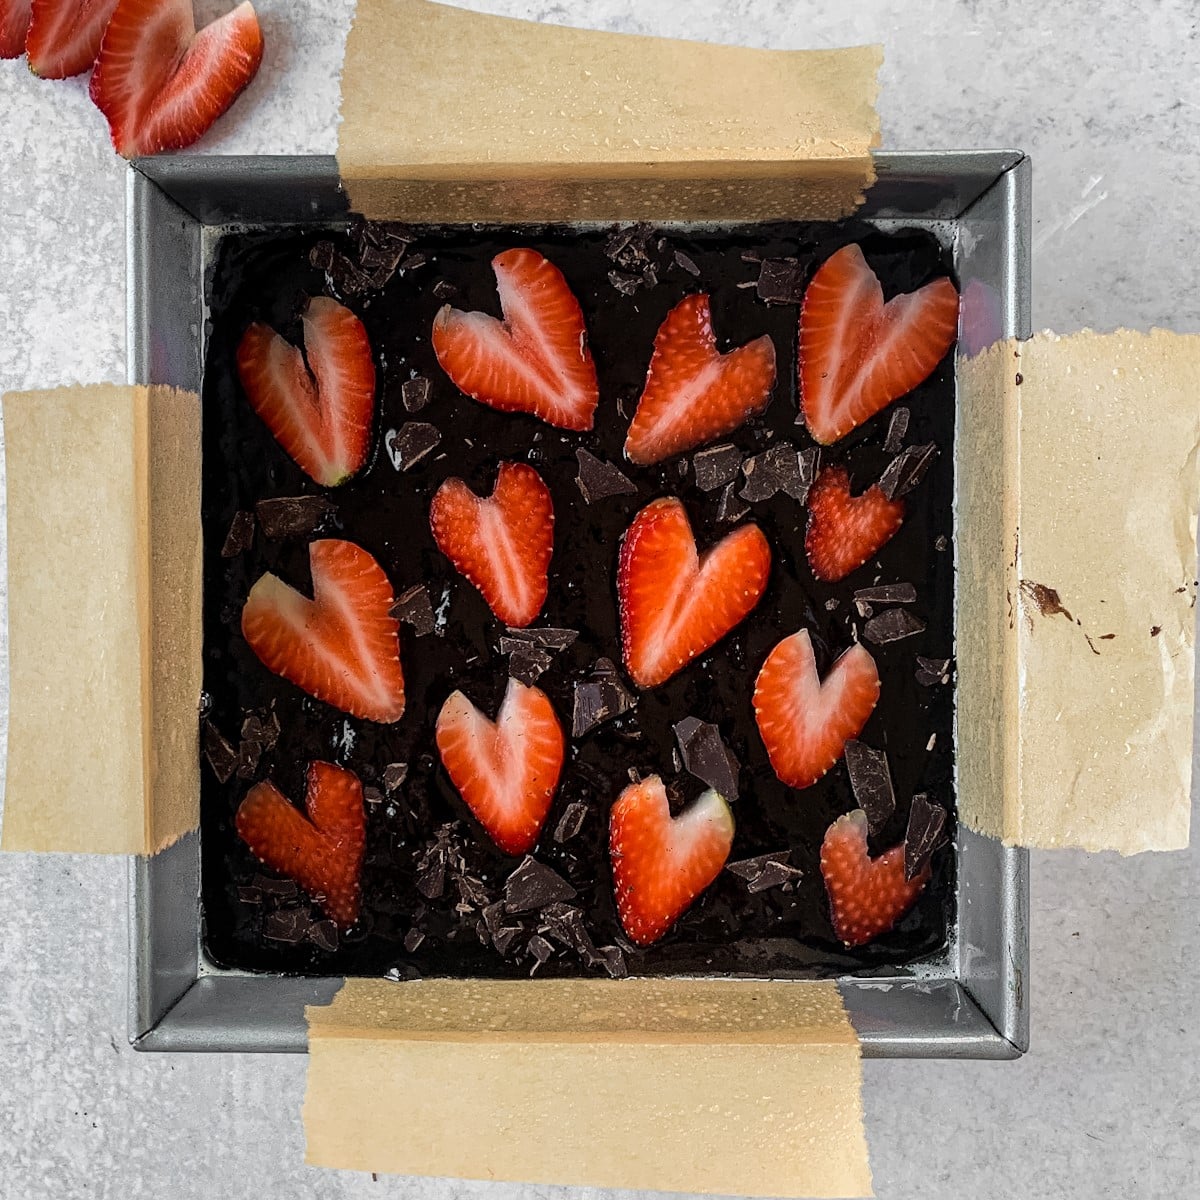 brownie batter in pan with sliced strawberries on top.